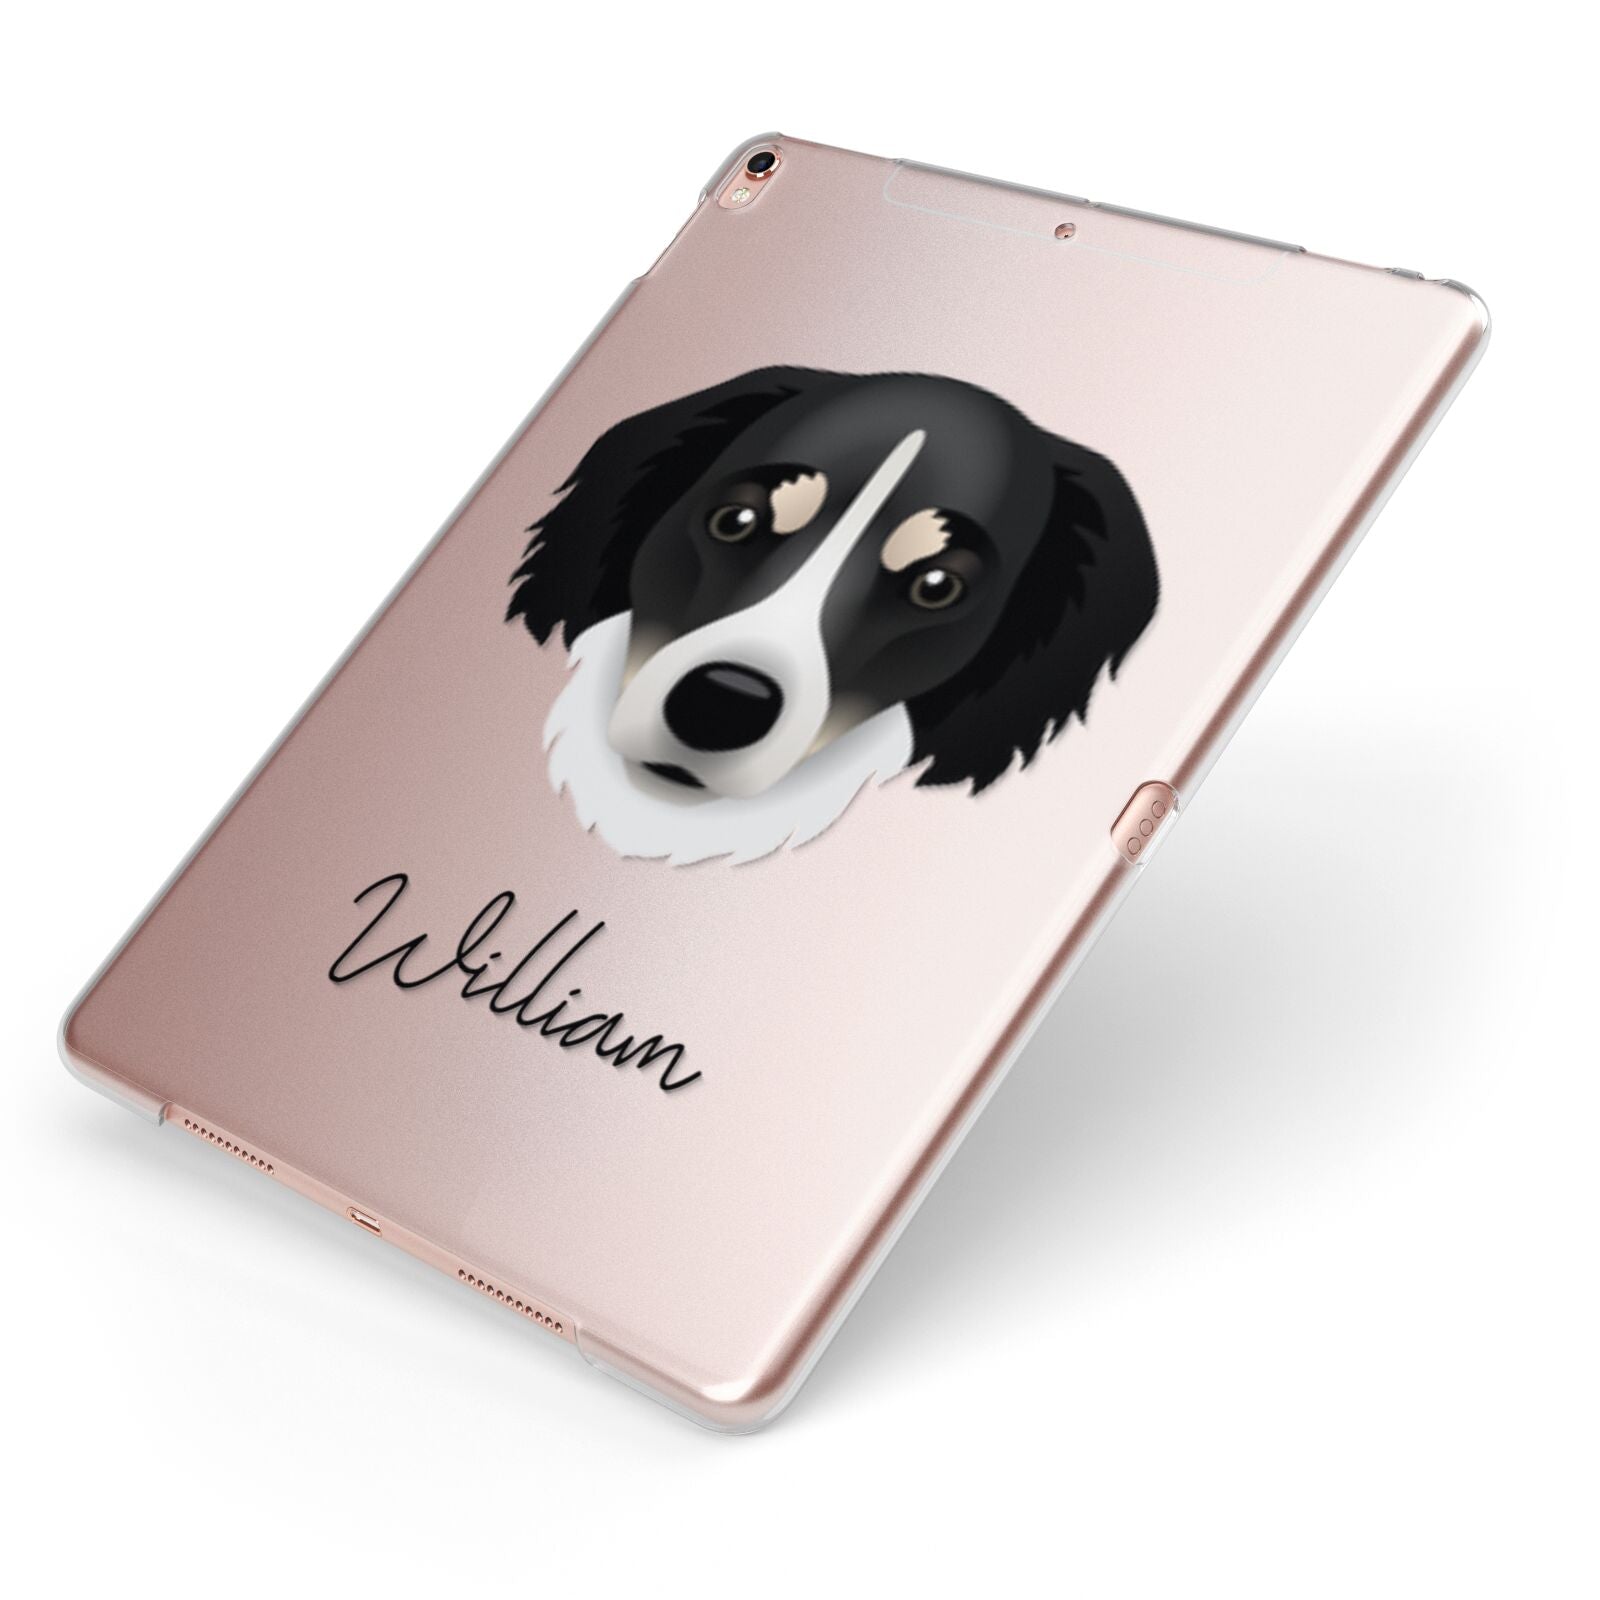 Siberian Cocker Personalised Apple iPad Case on Rose Gold iPad Side View